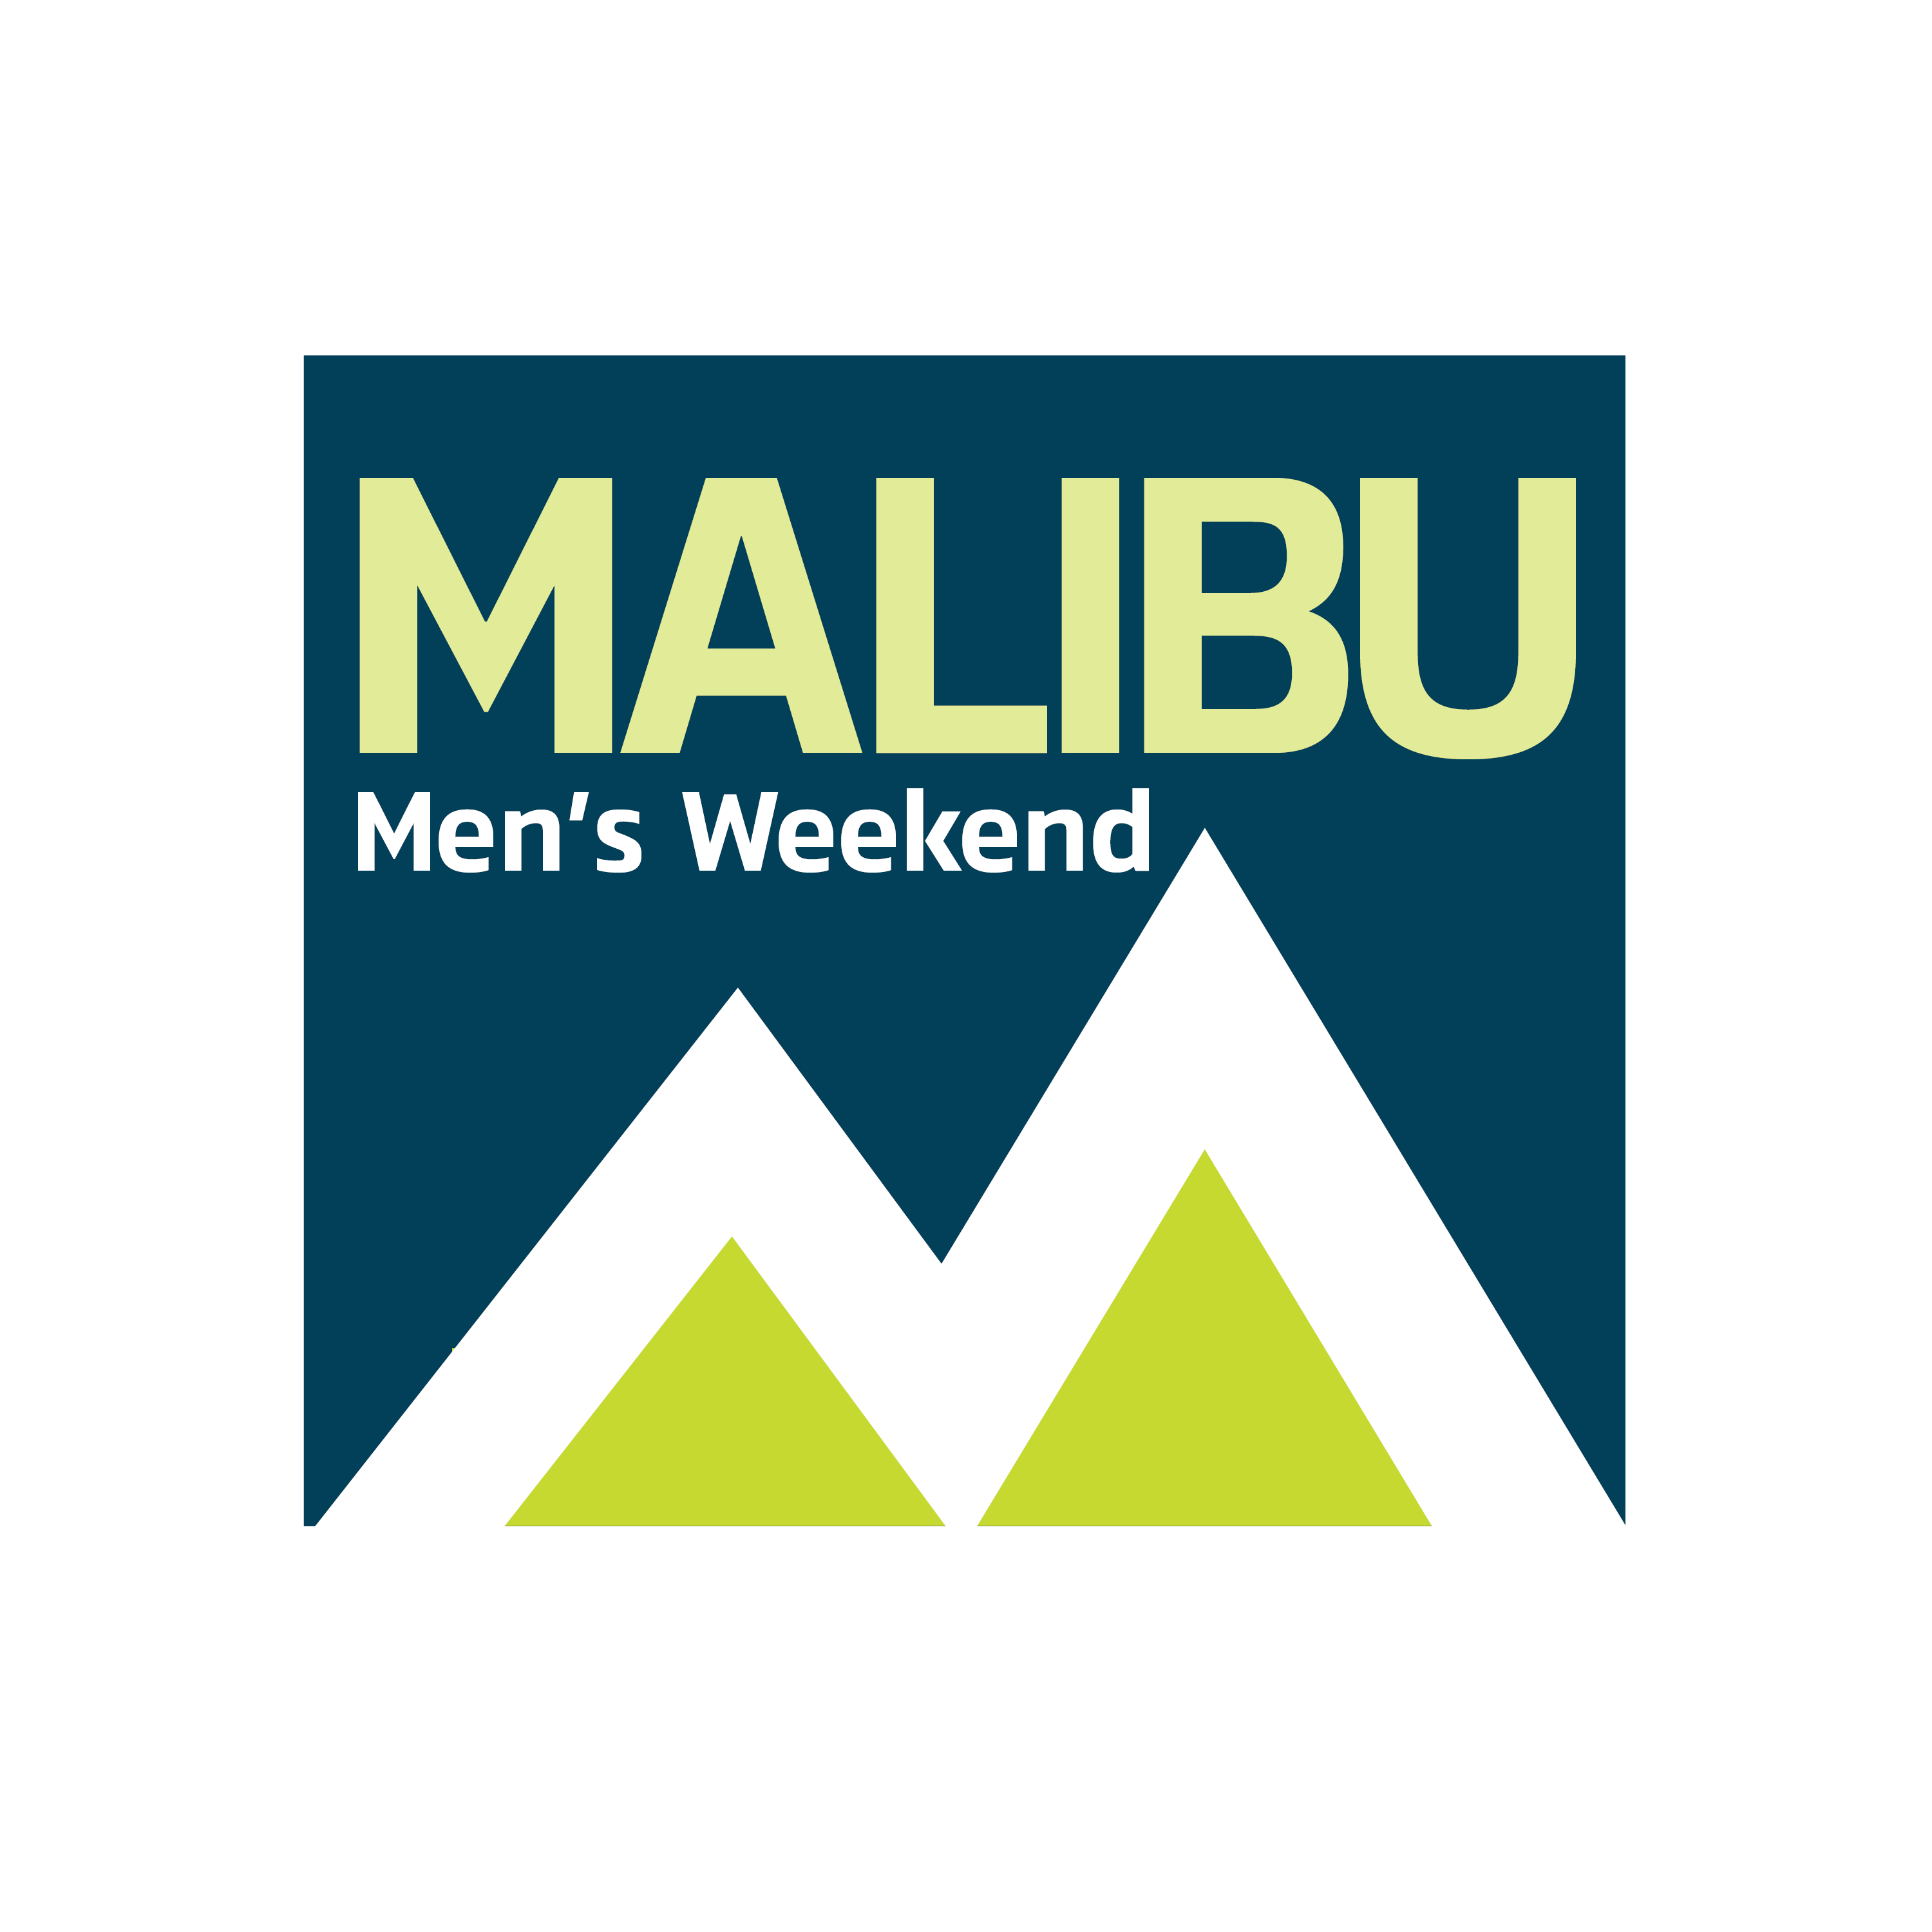 men's weekend logo image